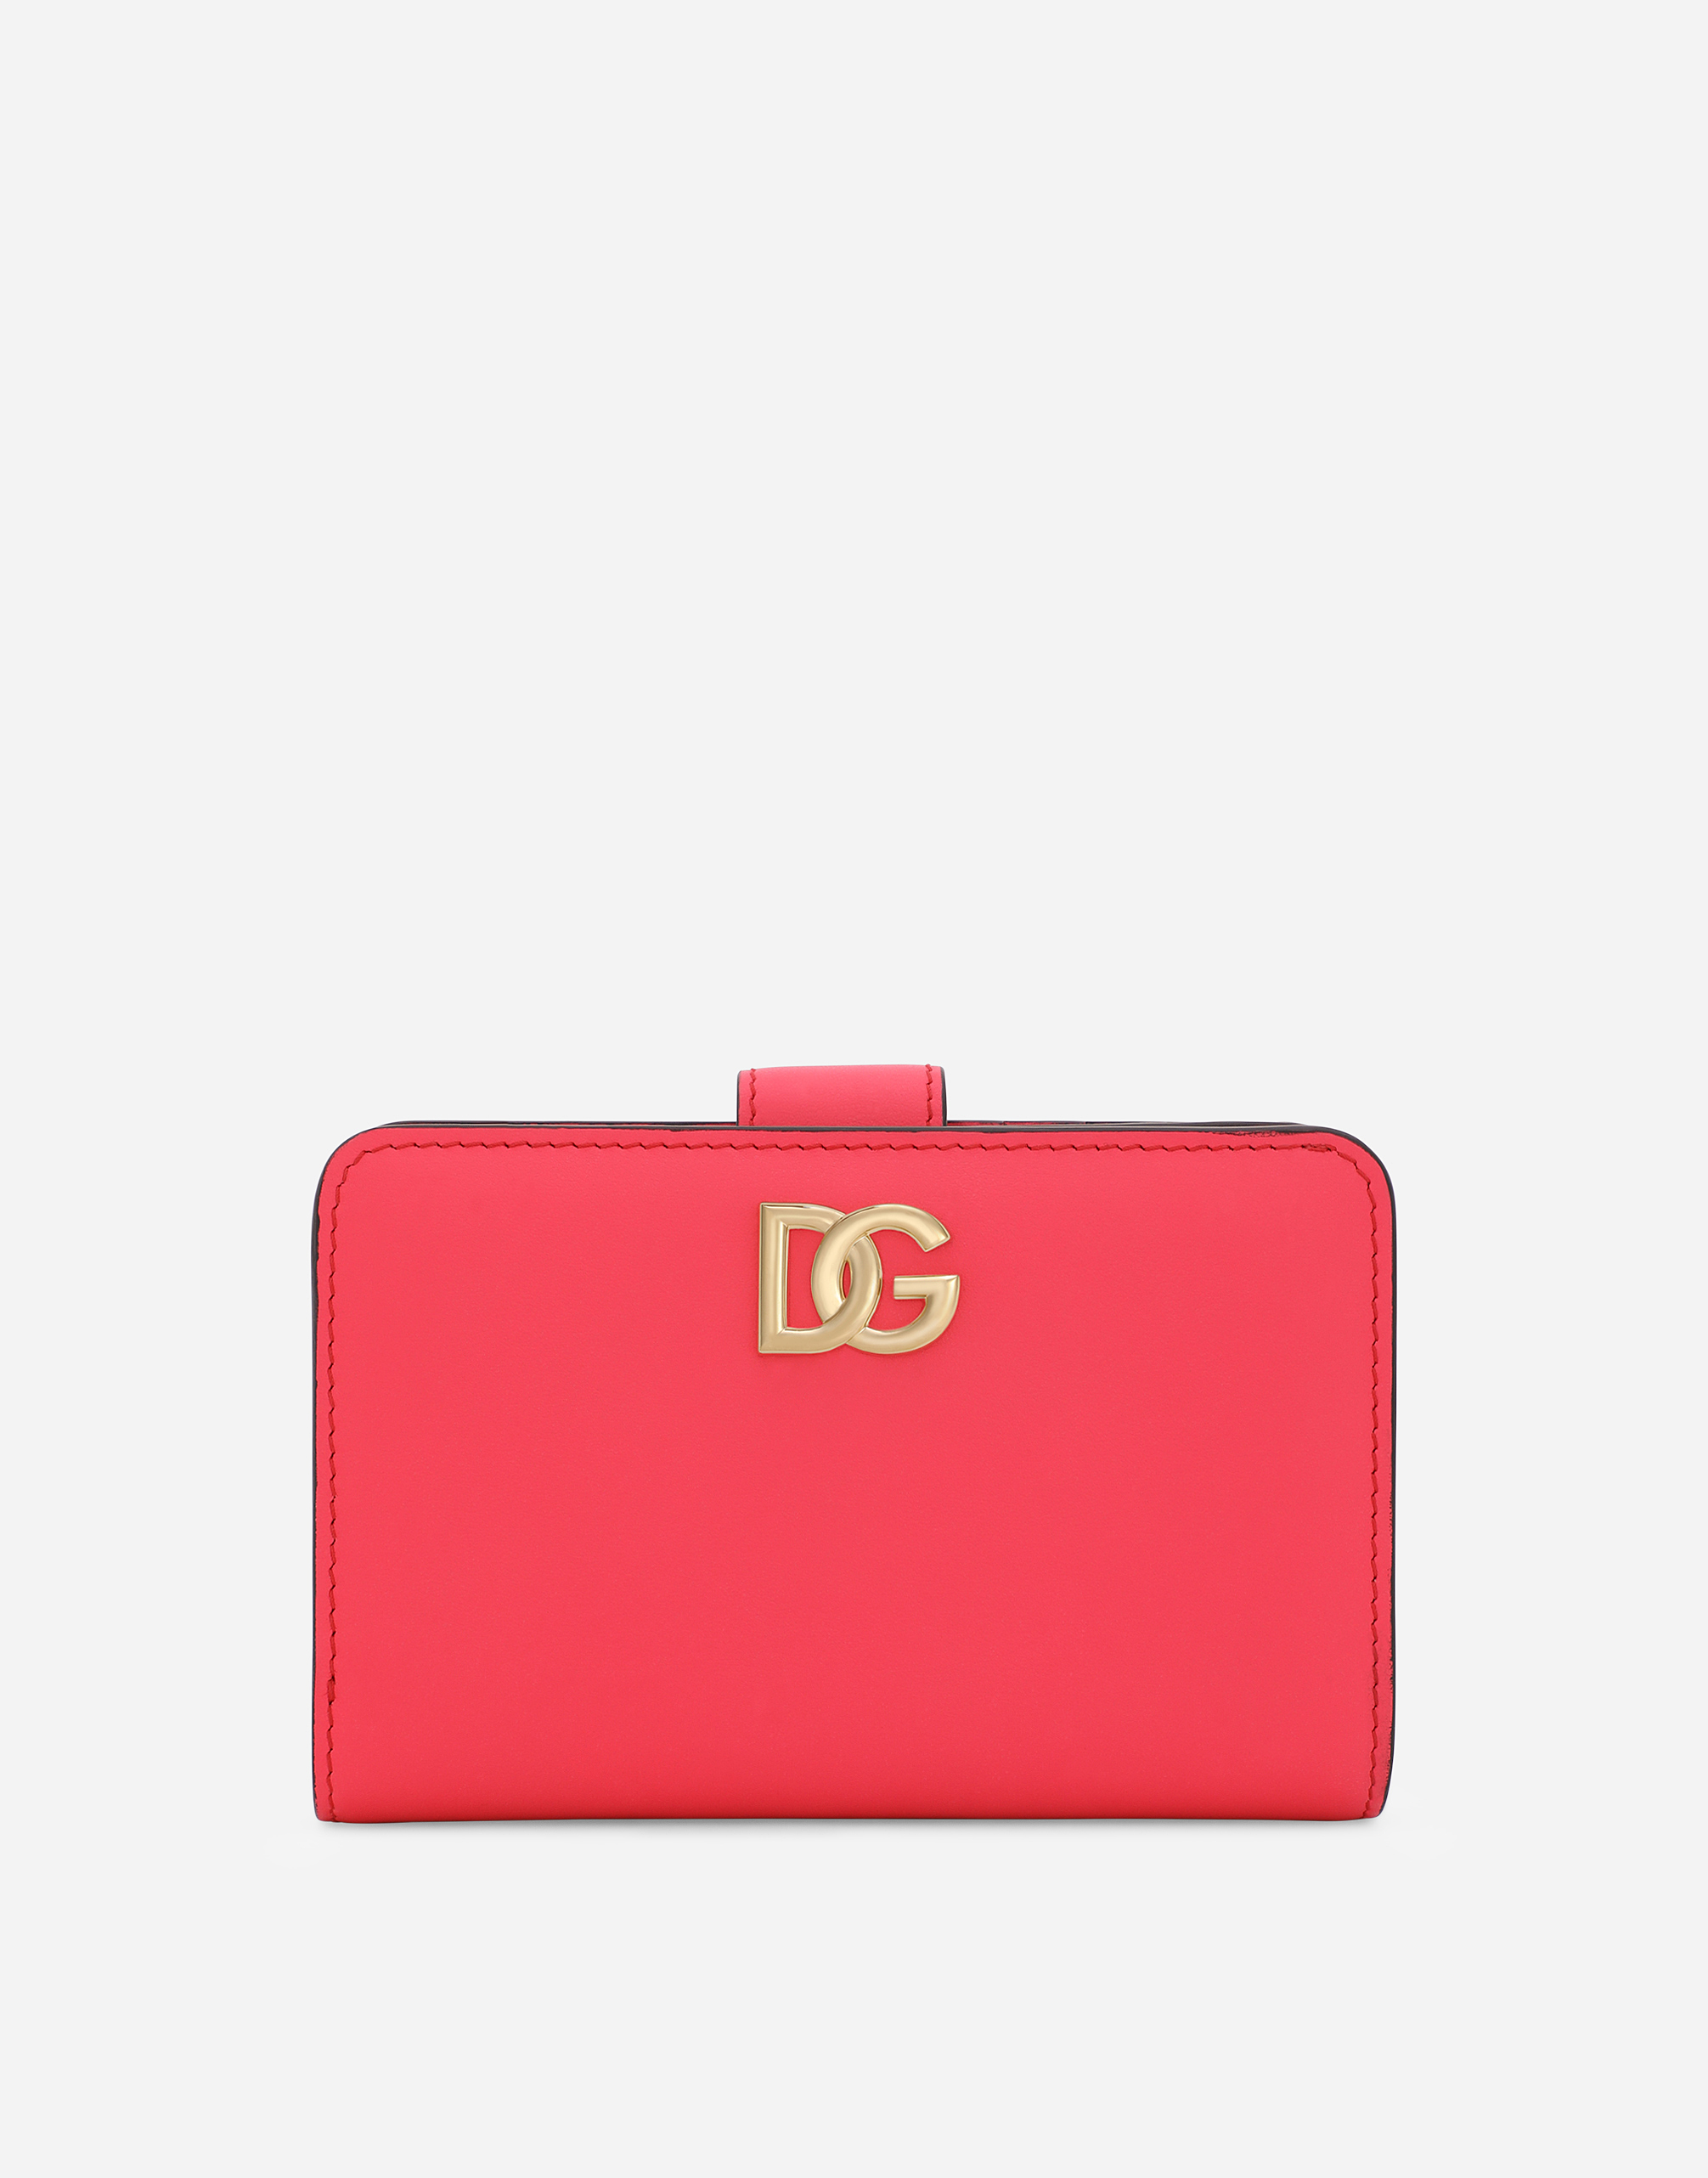 Calfskin wallet with DG logo in Multicolor